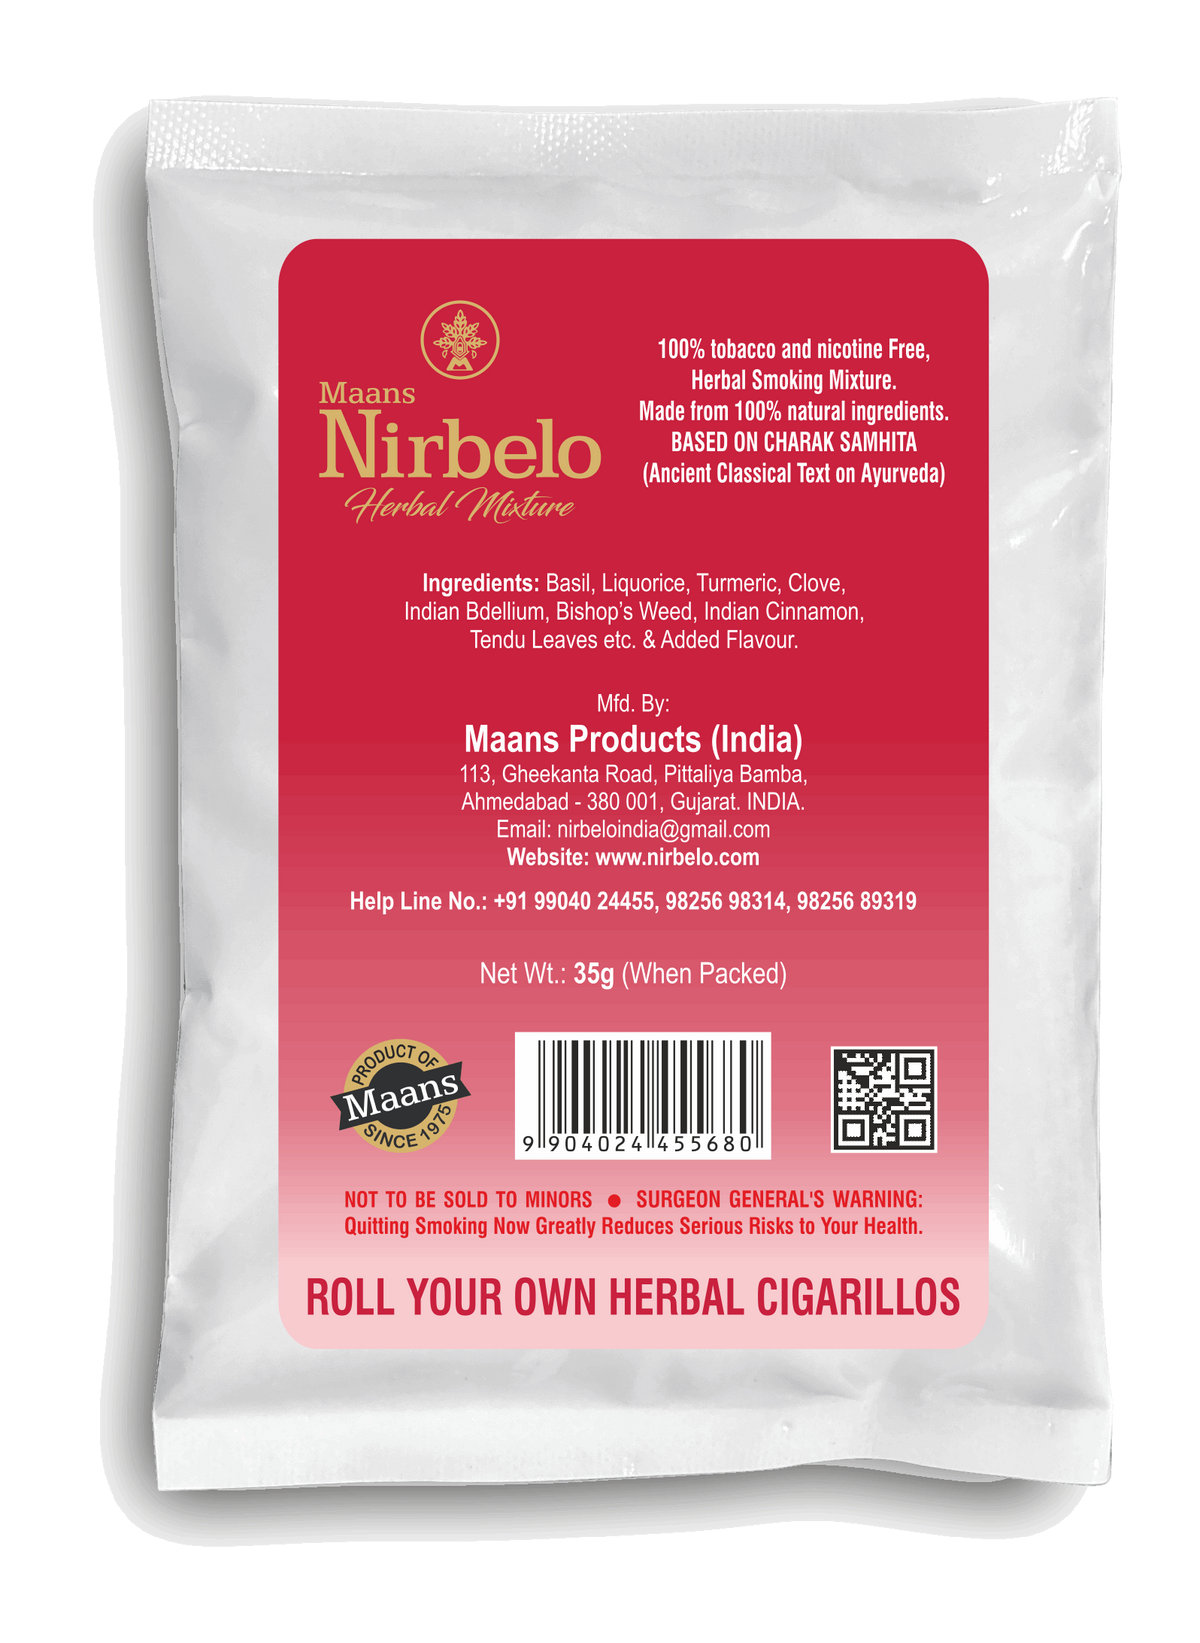 Nirbelo Herbal Raw Mixture Strawberry Flavor 100% Tobacco Free & Nicotine Free Natural Organic Ingredients for Quit Smoking & Nature's Alternative to Tobacco